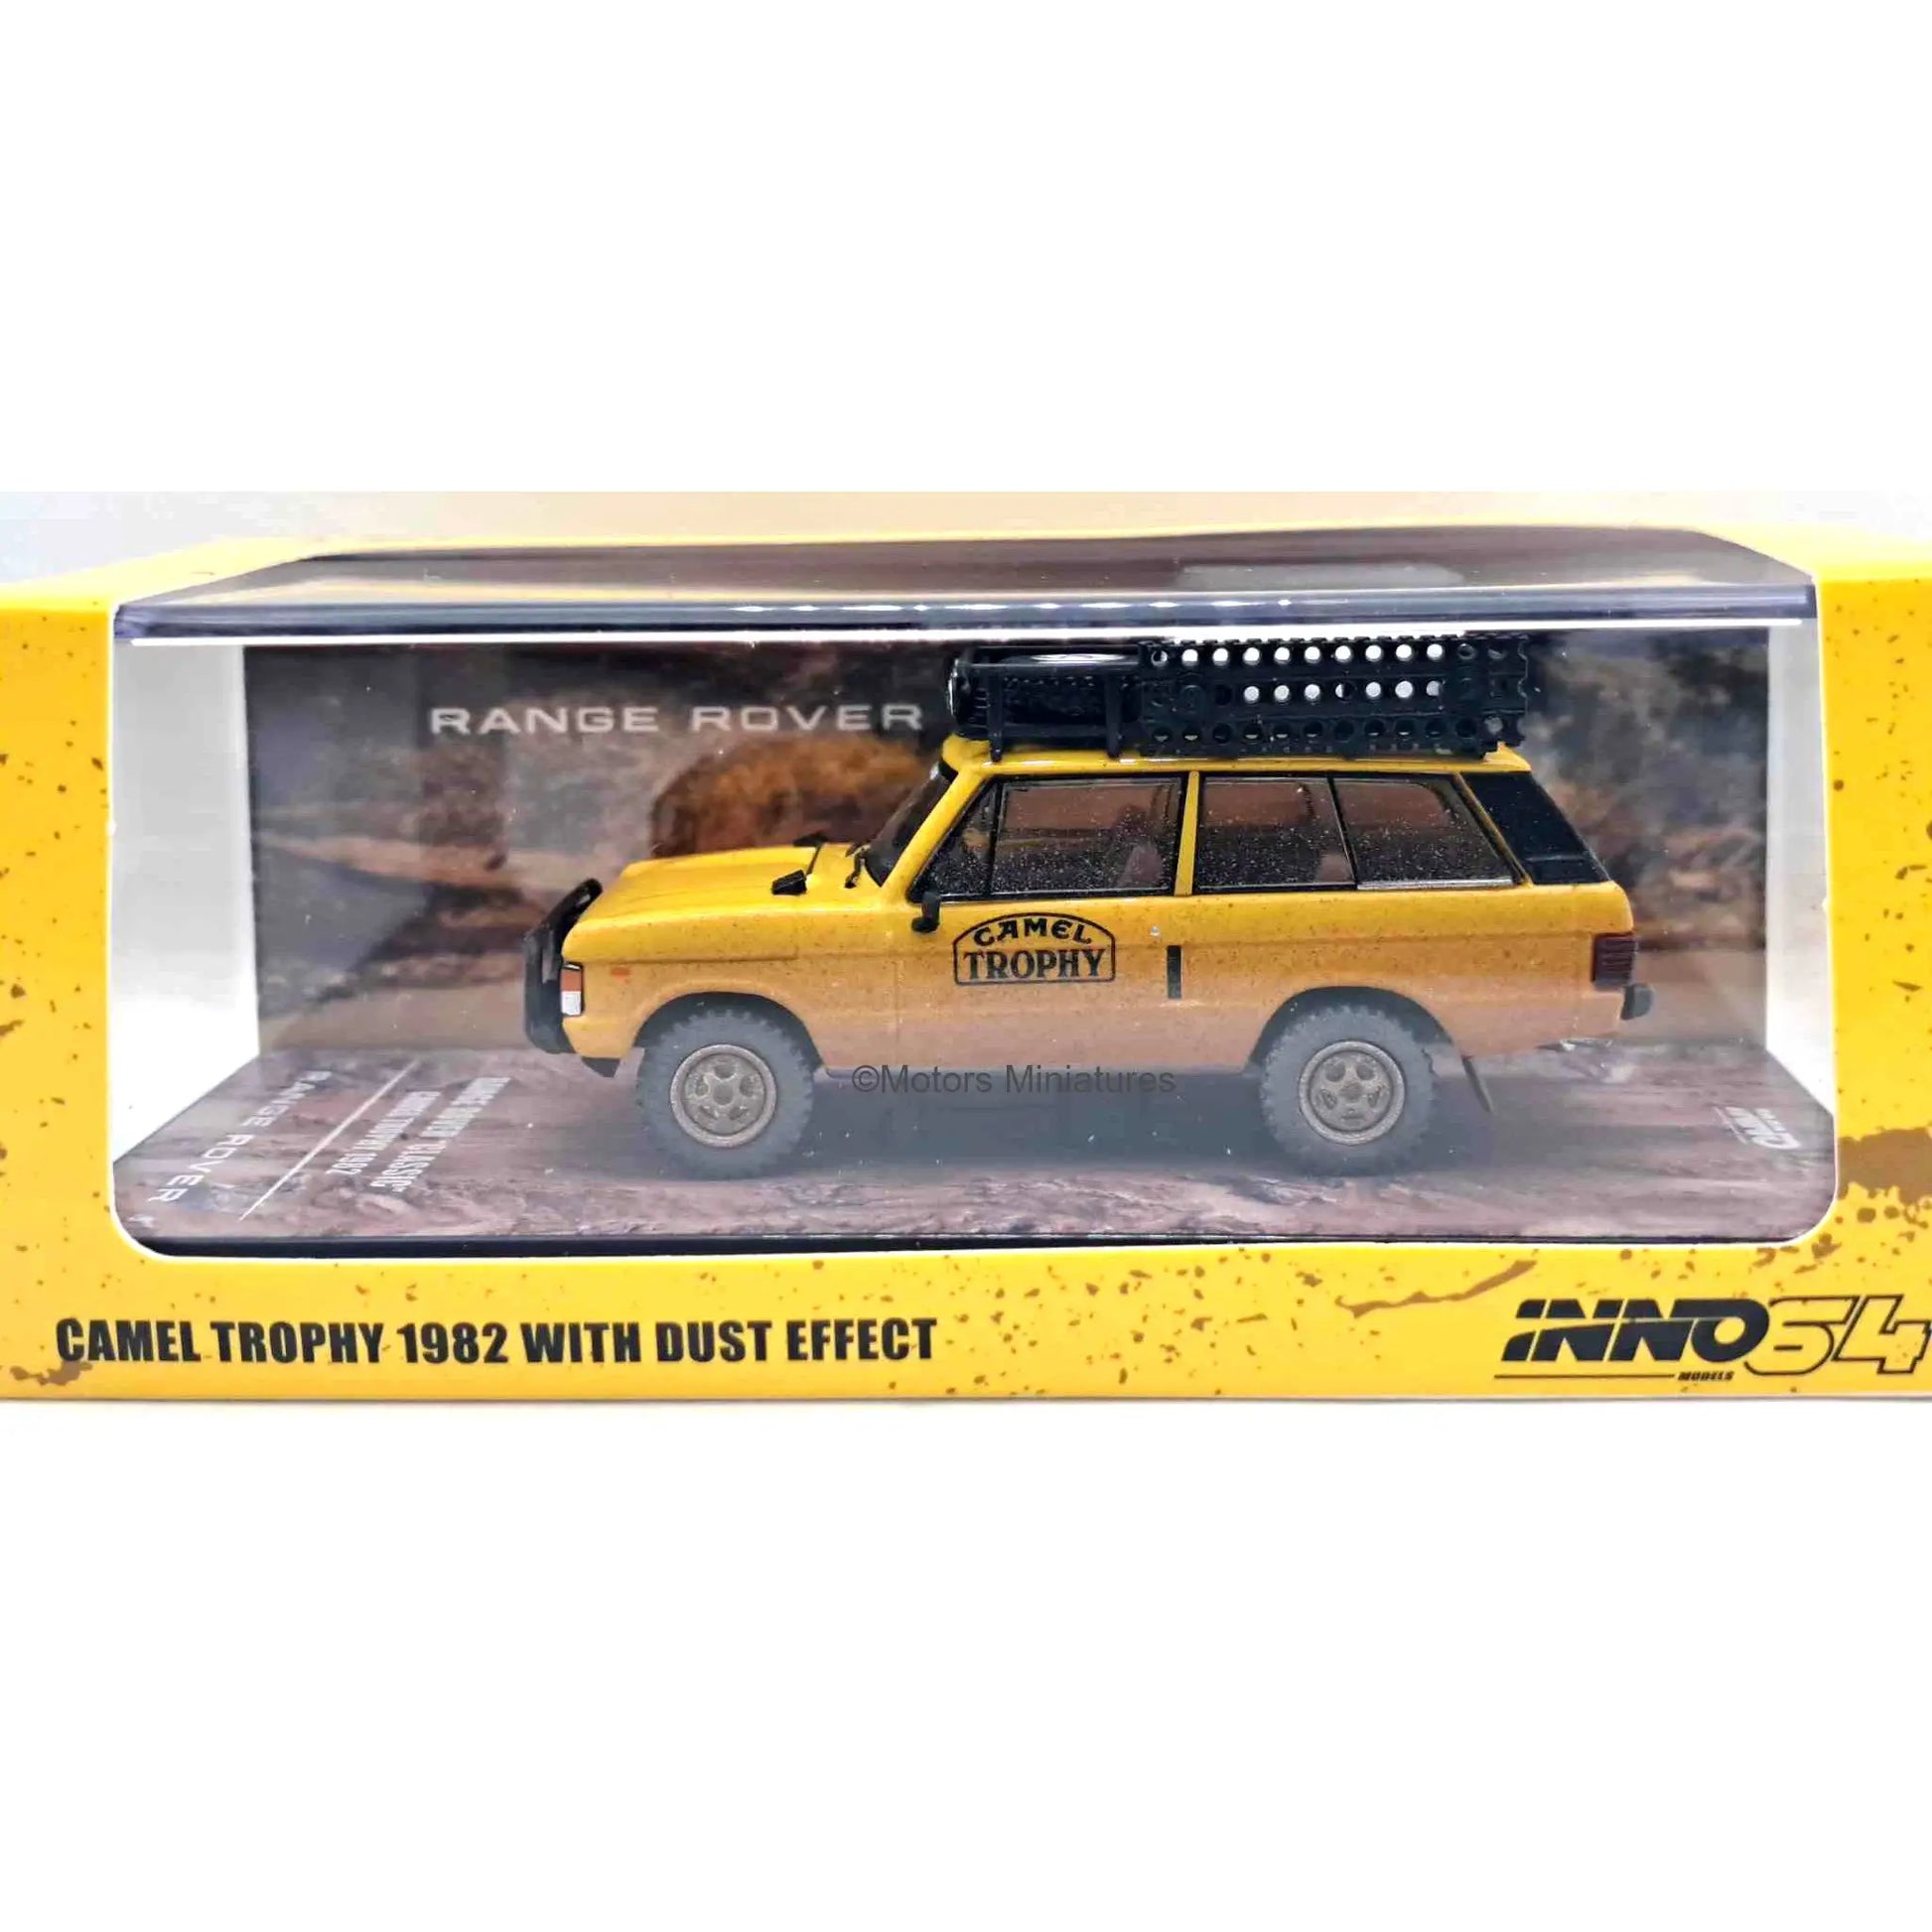 Range Rover Camel Trophy 1982 Inno64 1/64 | Motors Miniatures